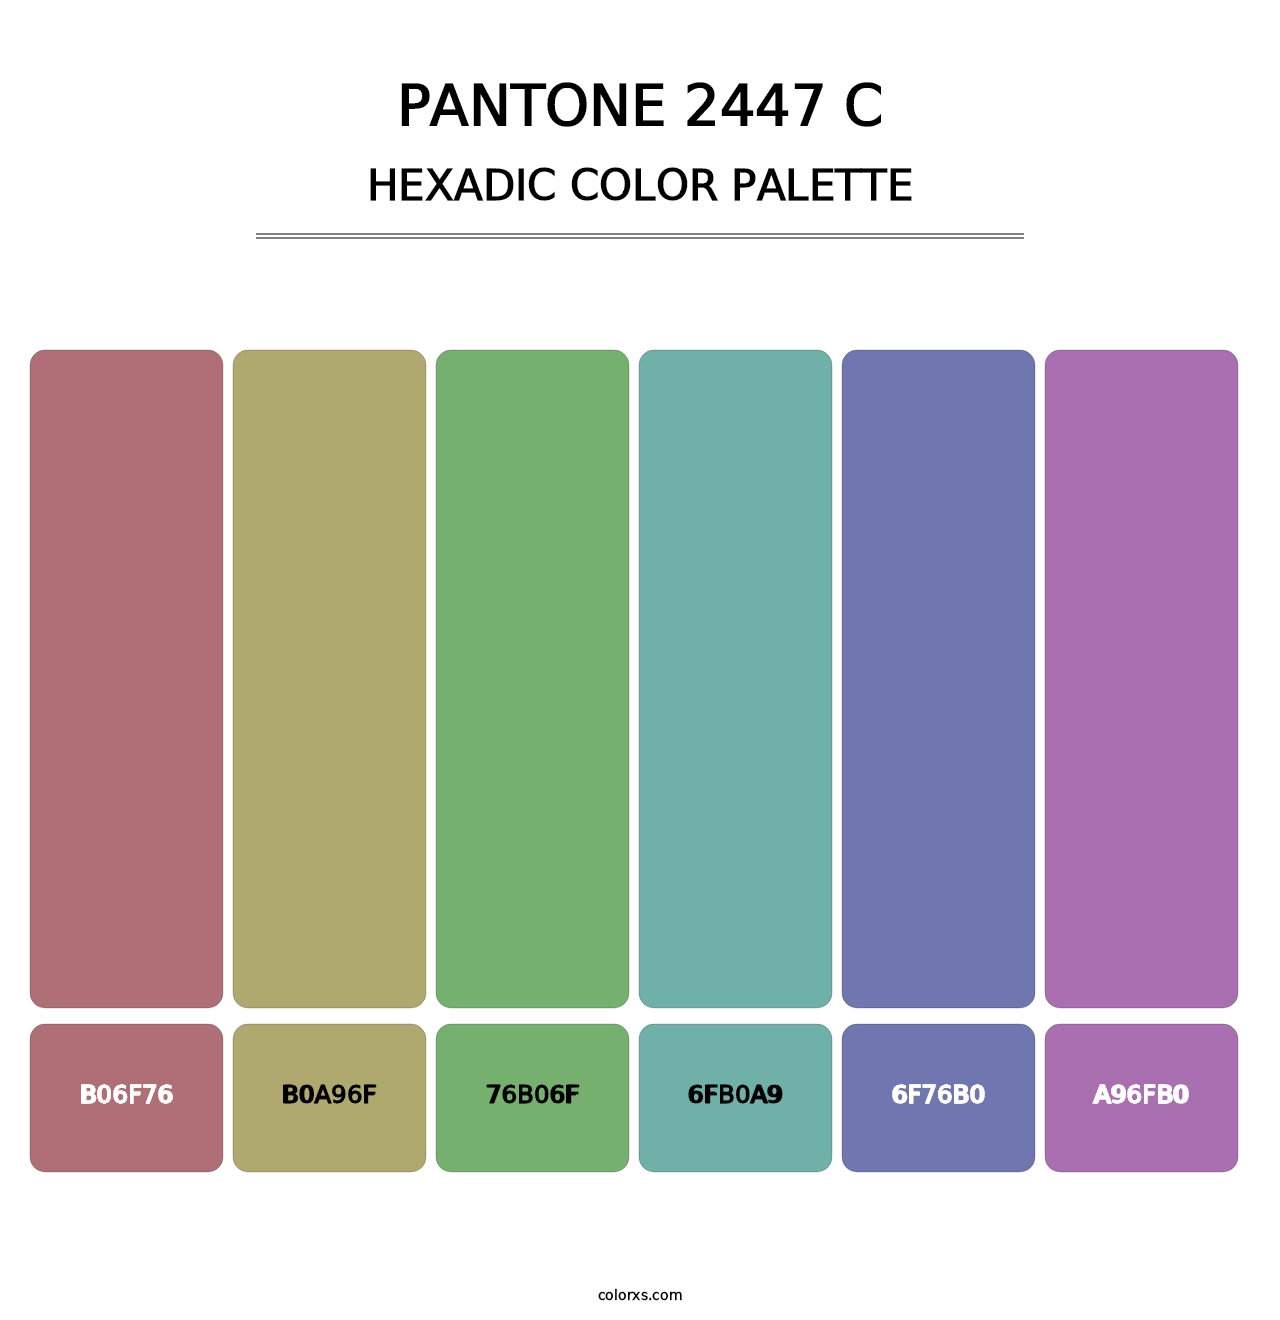 PANTONE 2447 C - Hexadic Color Palette